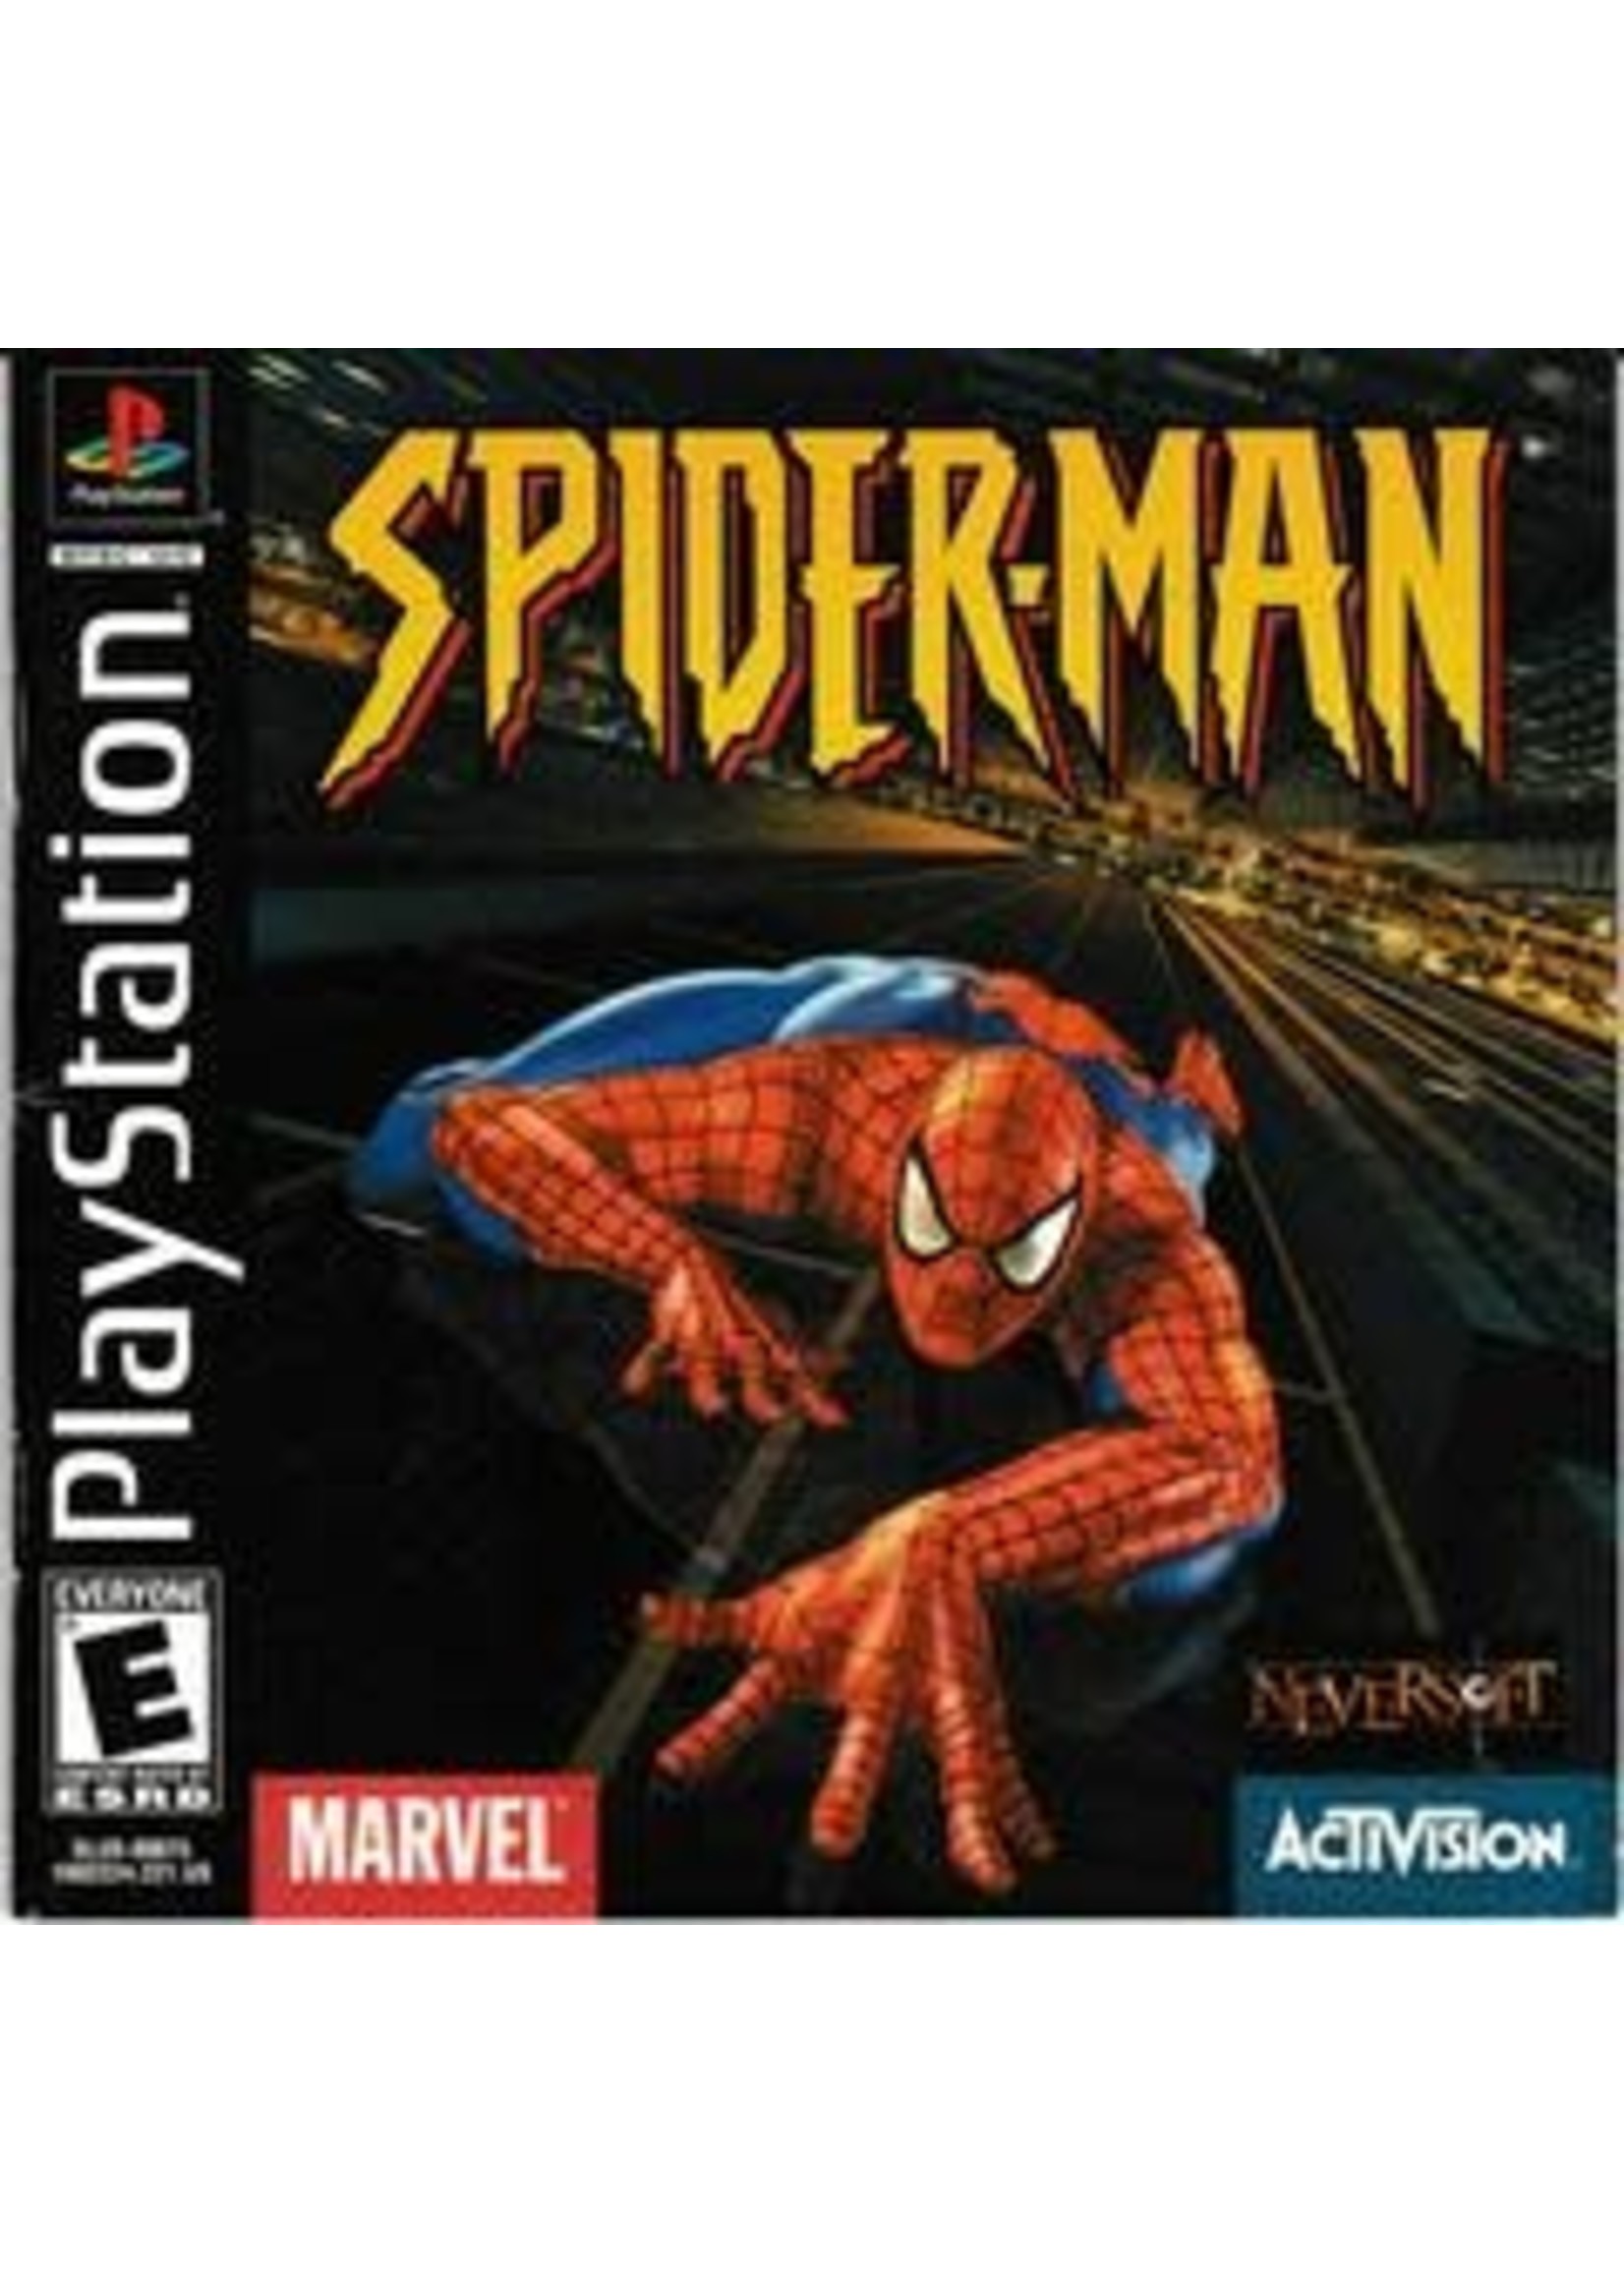 Spiderman Playstation